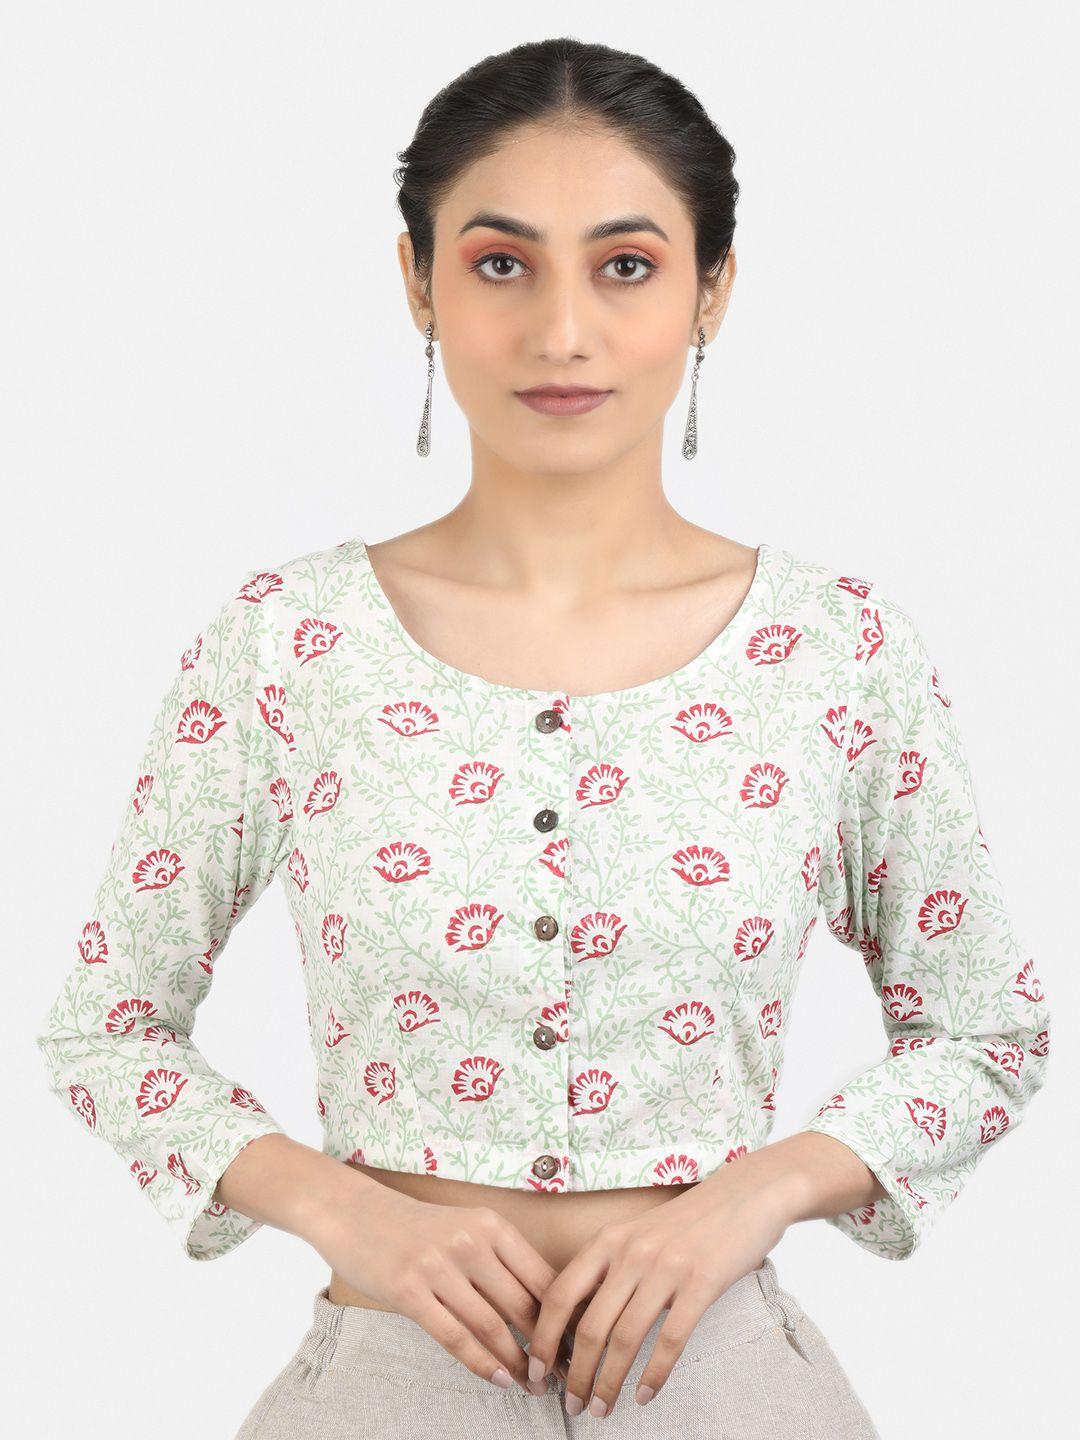 llajja block-printed pure-cotton readymade saree blouse